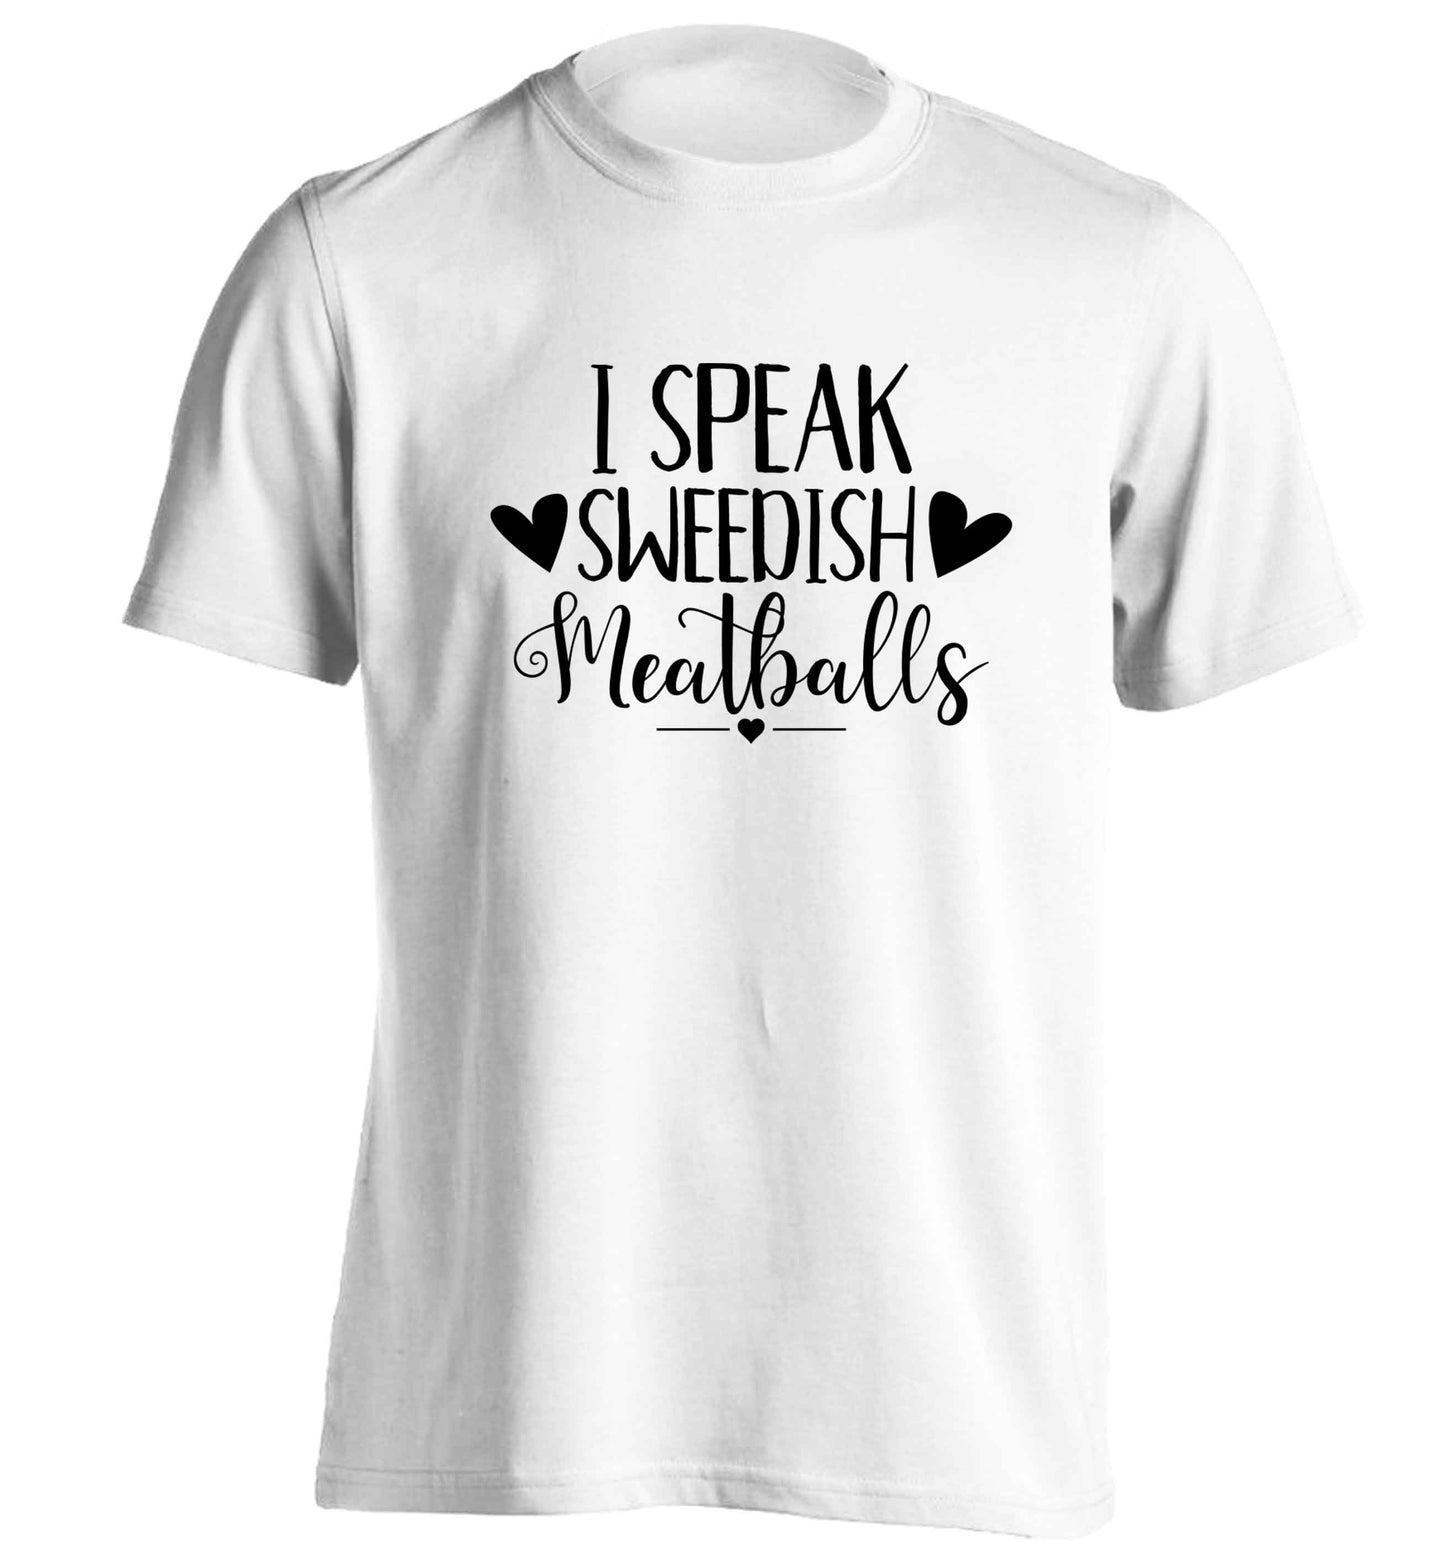 I speak sweedish...meatballs adults unisex white Tshirt 2XL